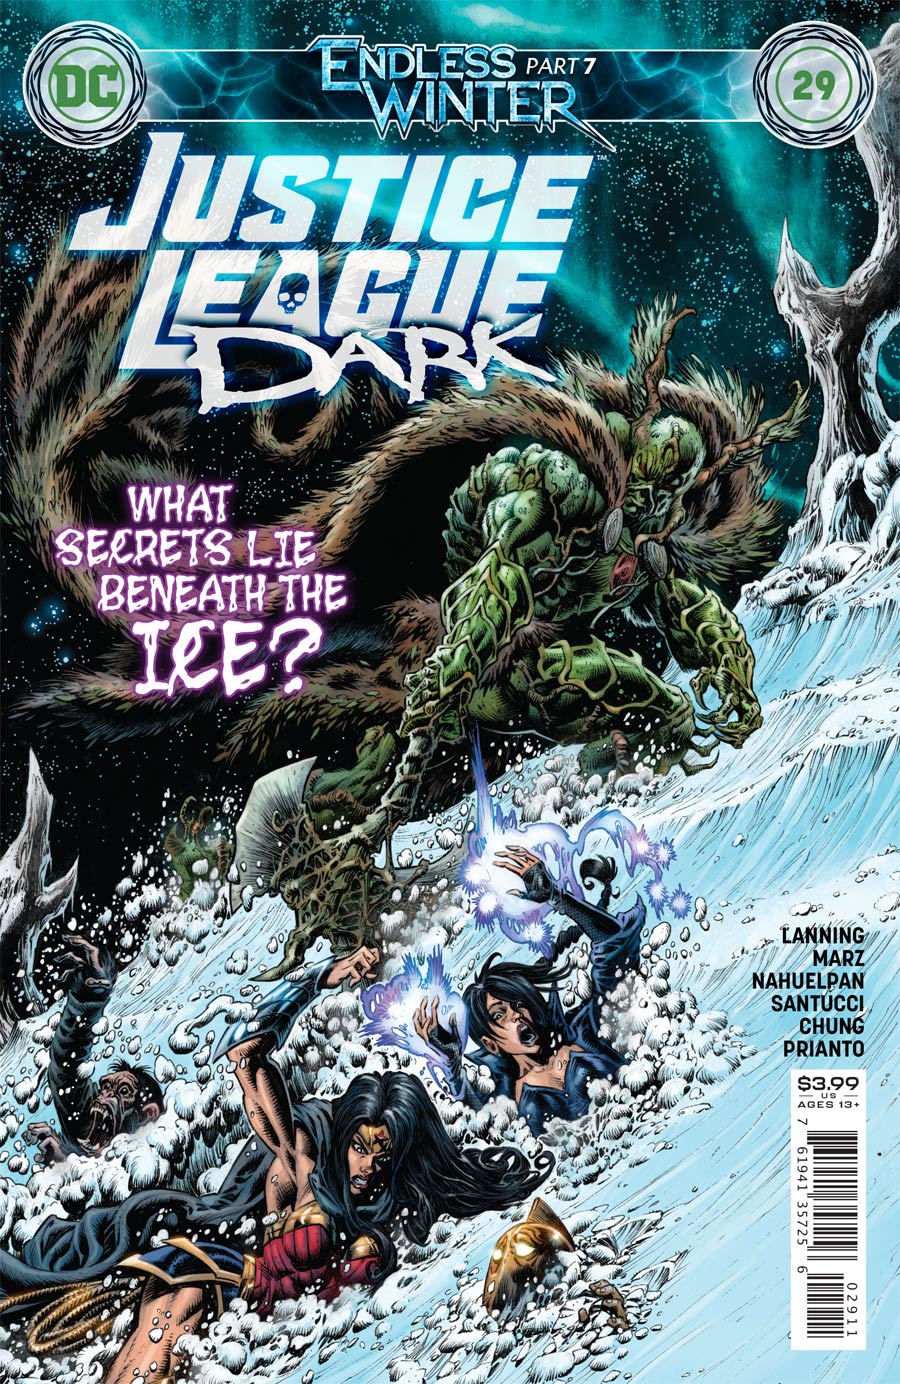 Justice League Dark Vol 2 #29 Cover A Regular Kyle Hotz Cover (Endless Winter Part 7)